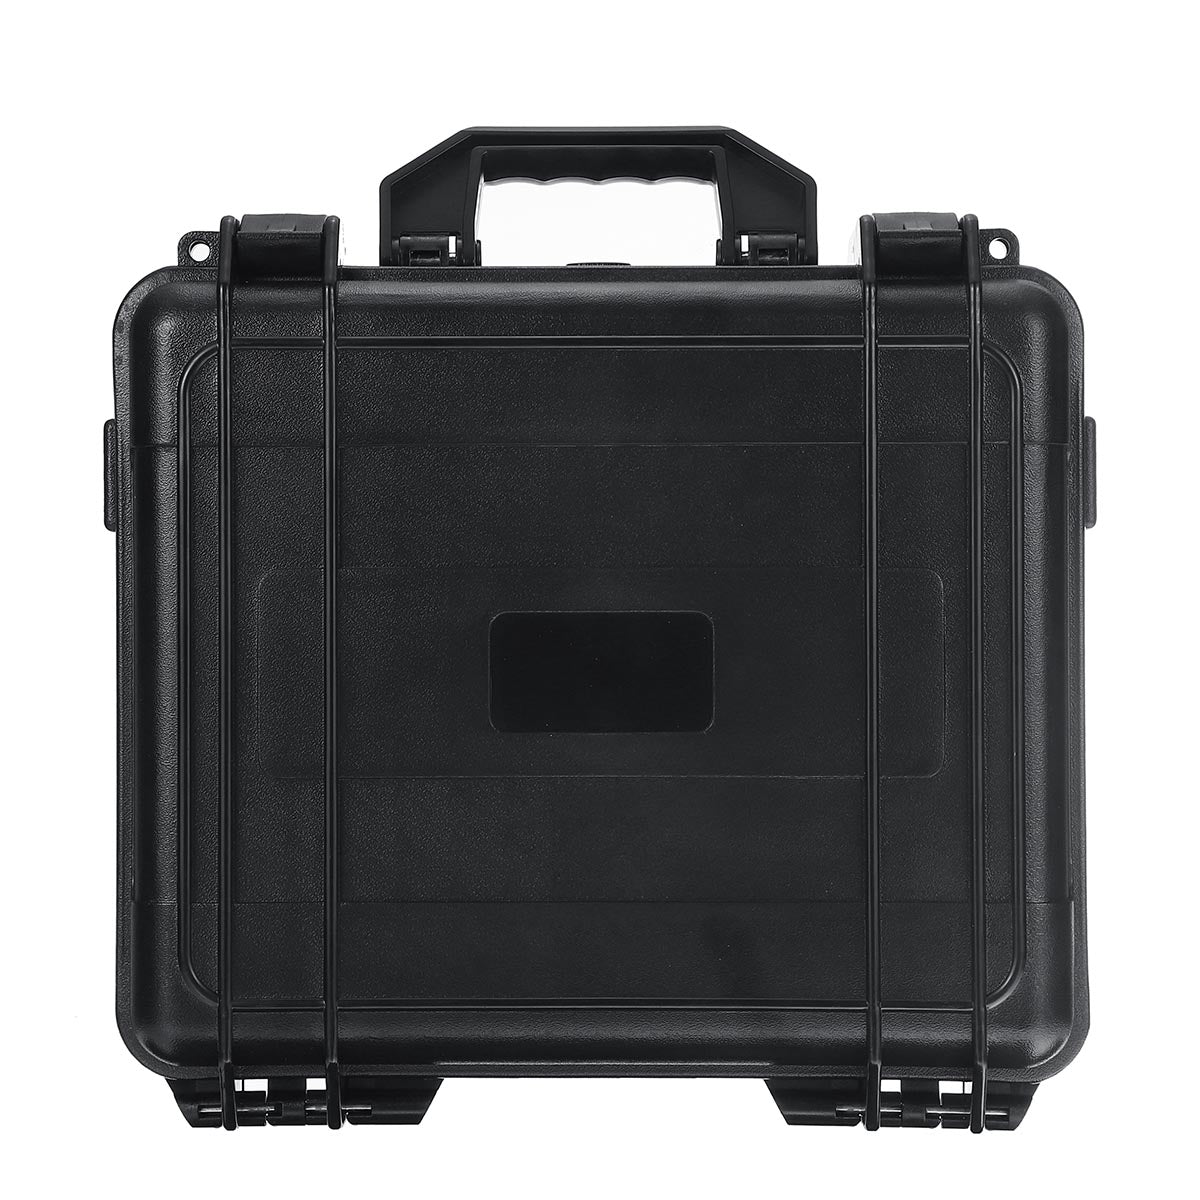 Shockproof Portable Carry Hard Case Storage Bag Black For DJI Mavic 2 Pro / Zoom